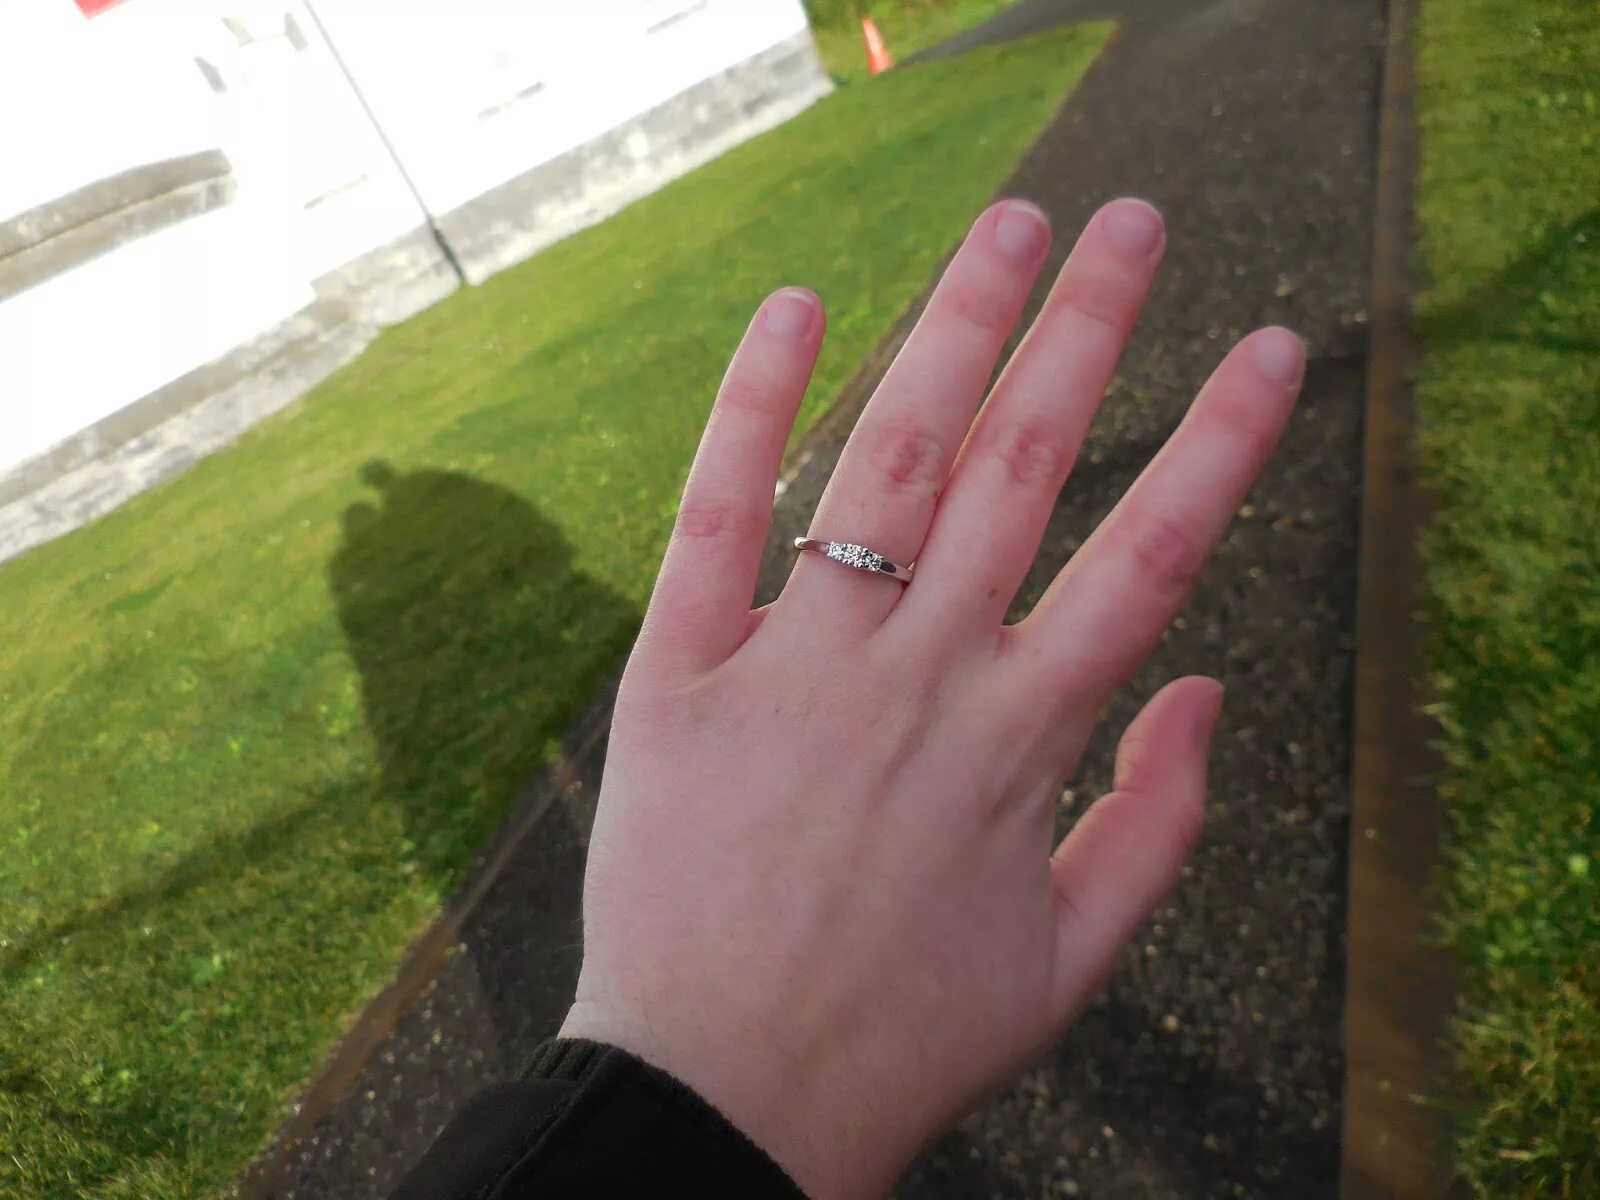 I have said yes. I said Yes кольцо. I say Yes кольцо. Кольцо Acsy i say Yes. I said Yes фото рук.